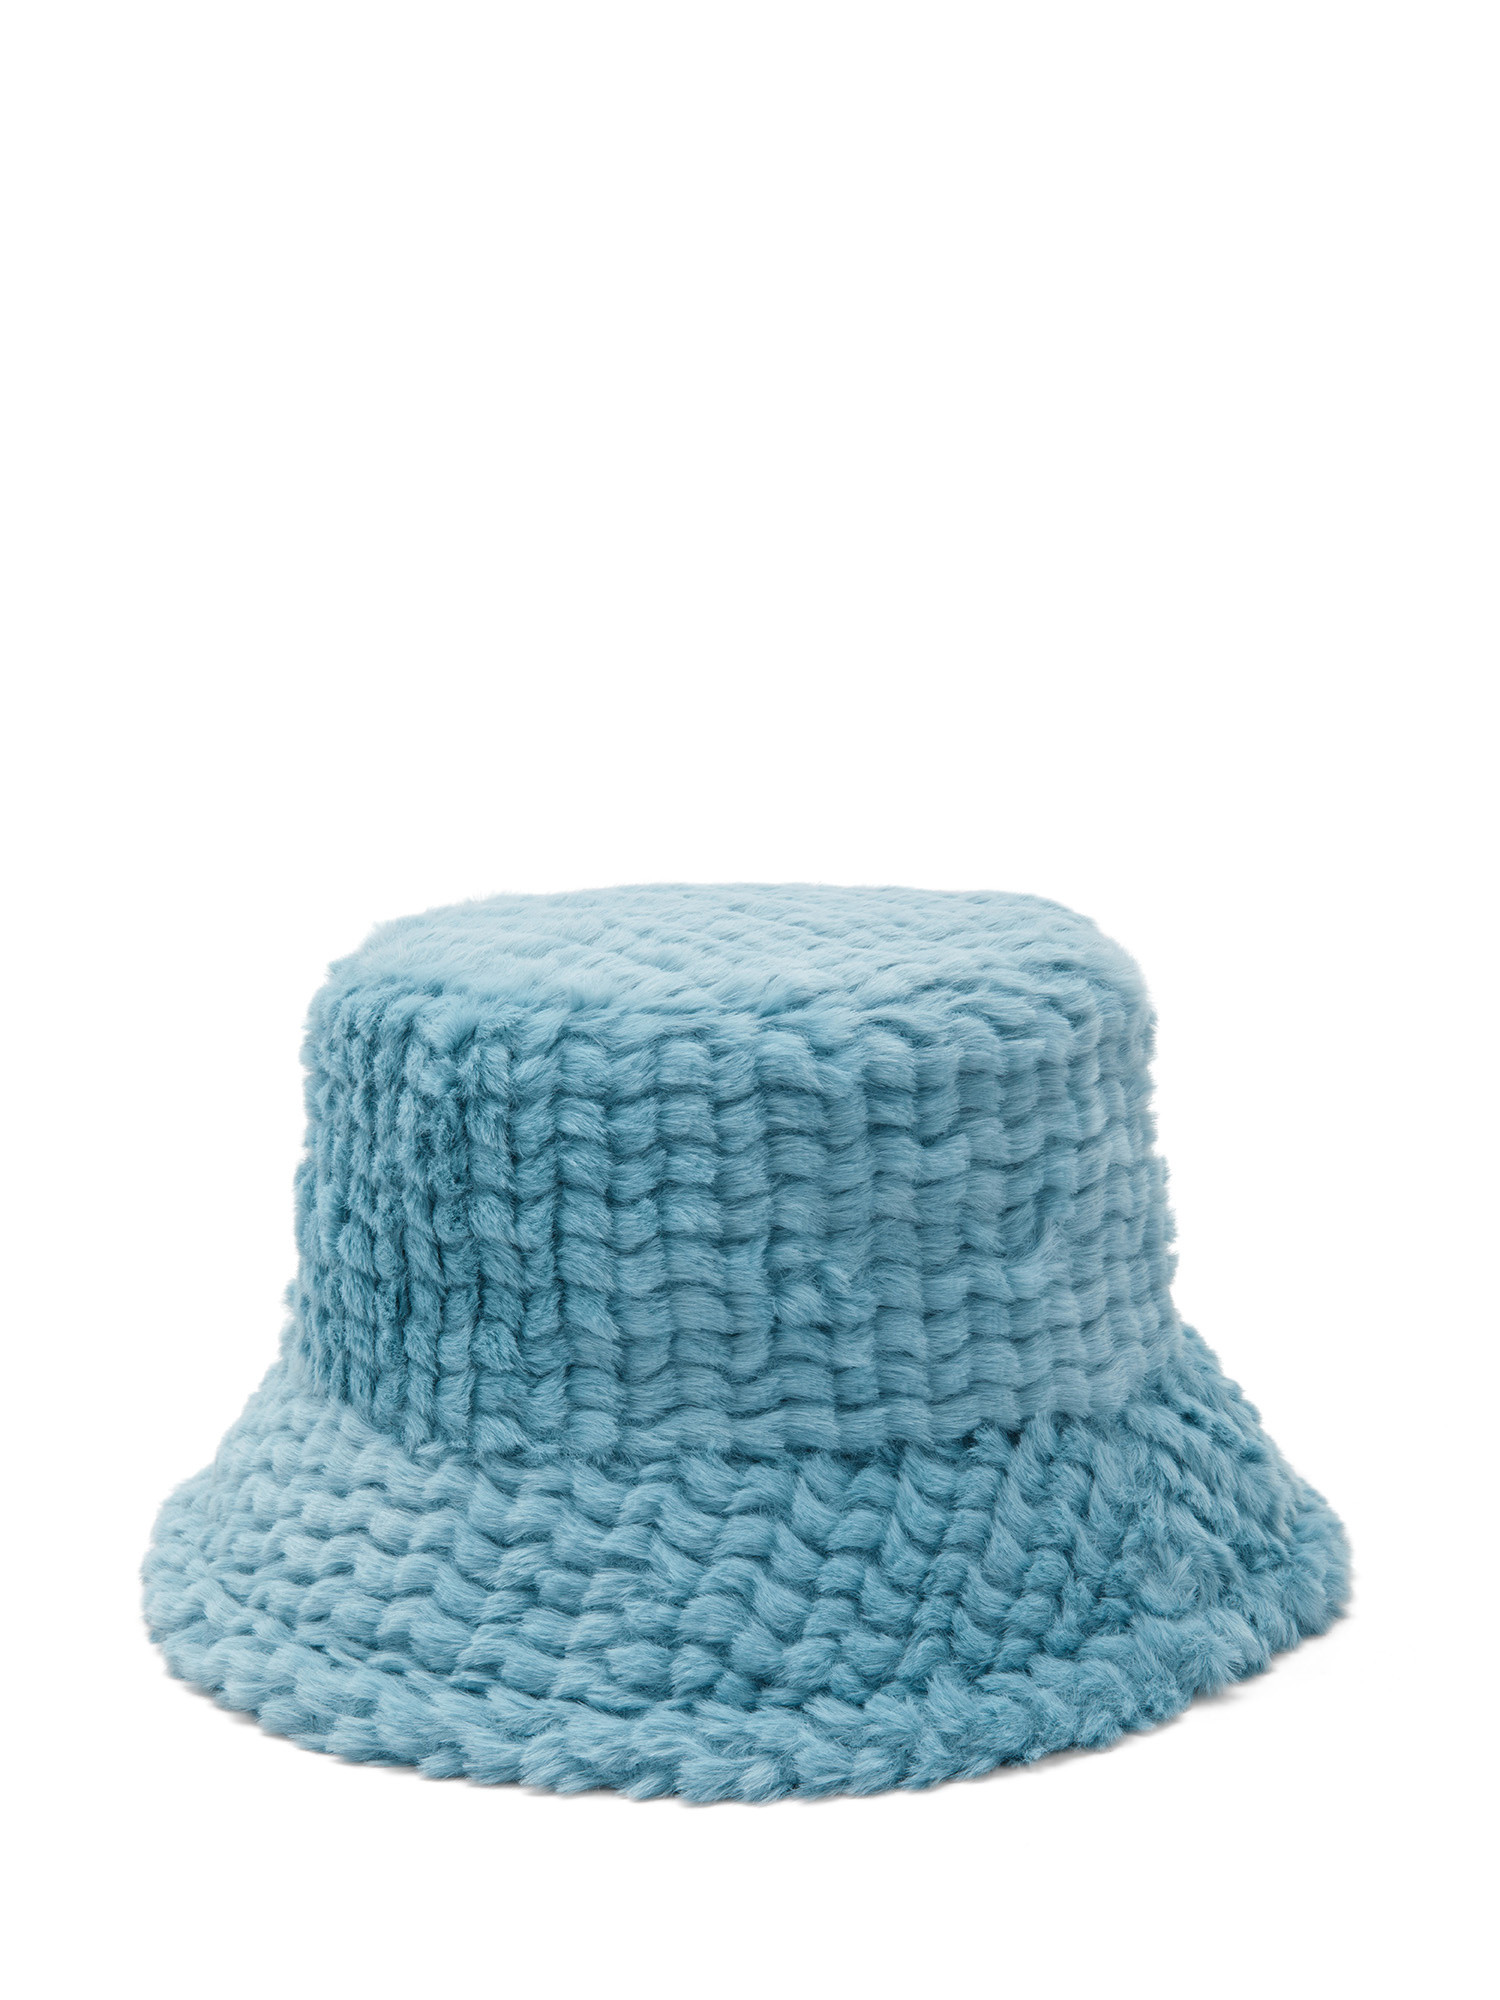 Koan - Cappello in ecopelliccia, Azzurro, large image number 0